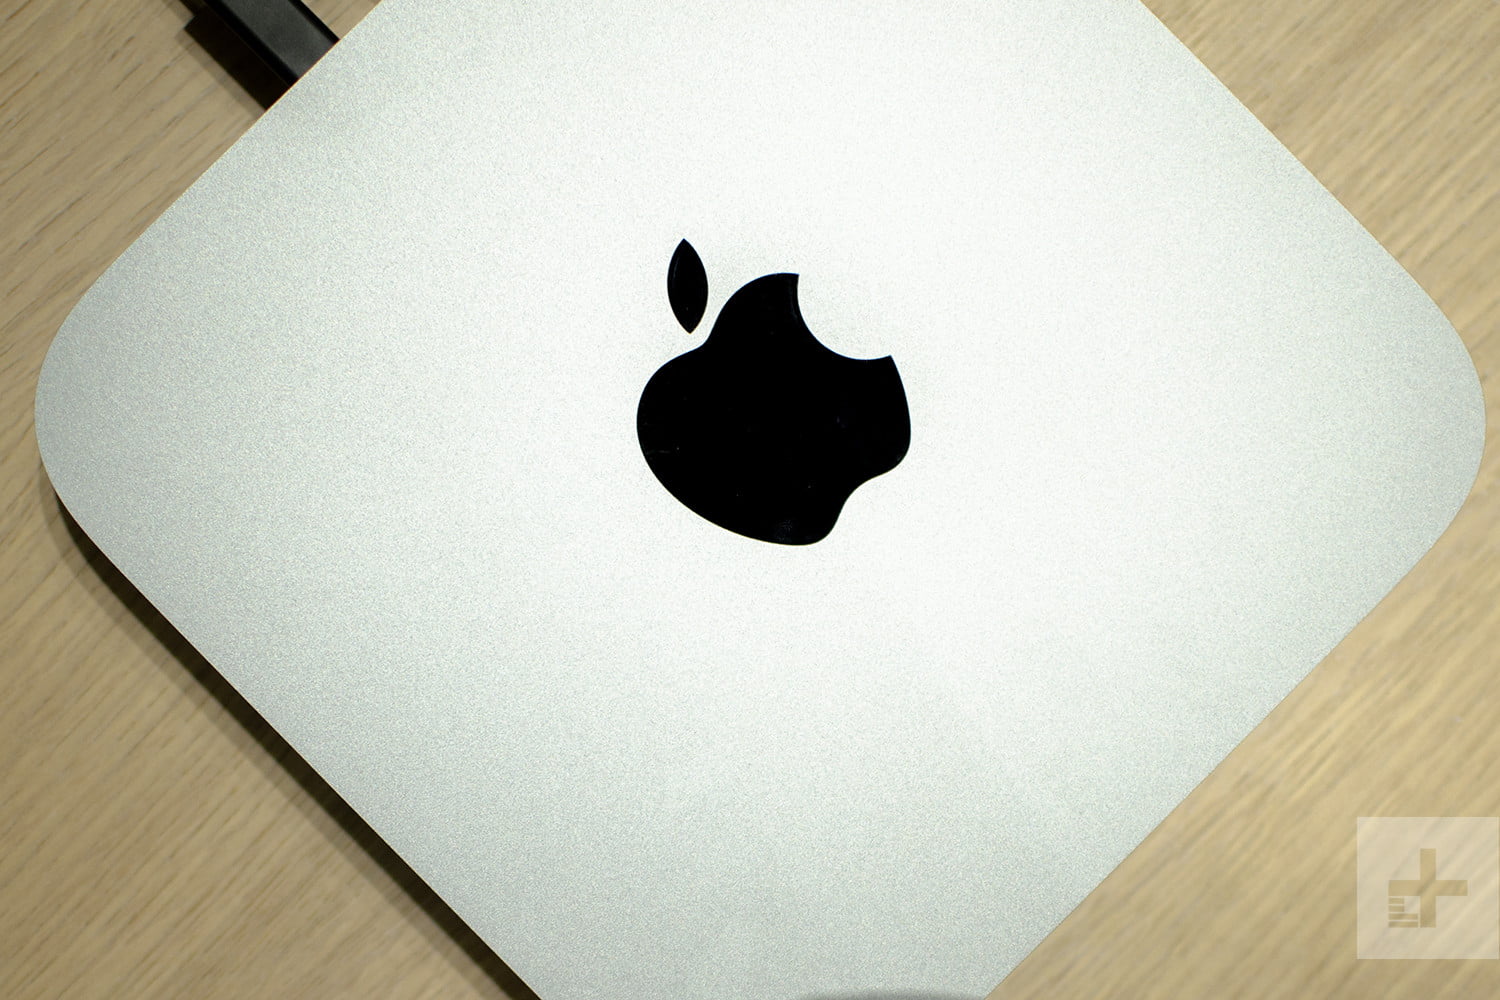 best price for apple mac mini